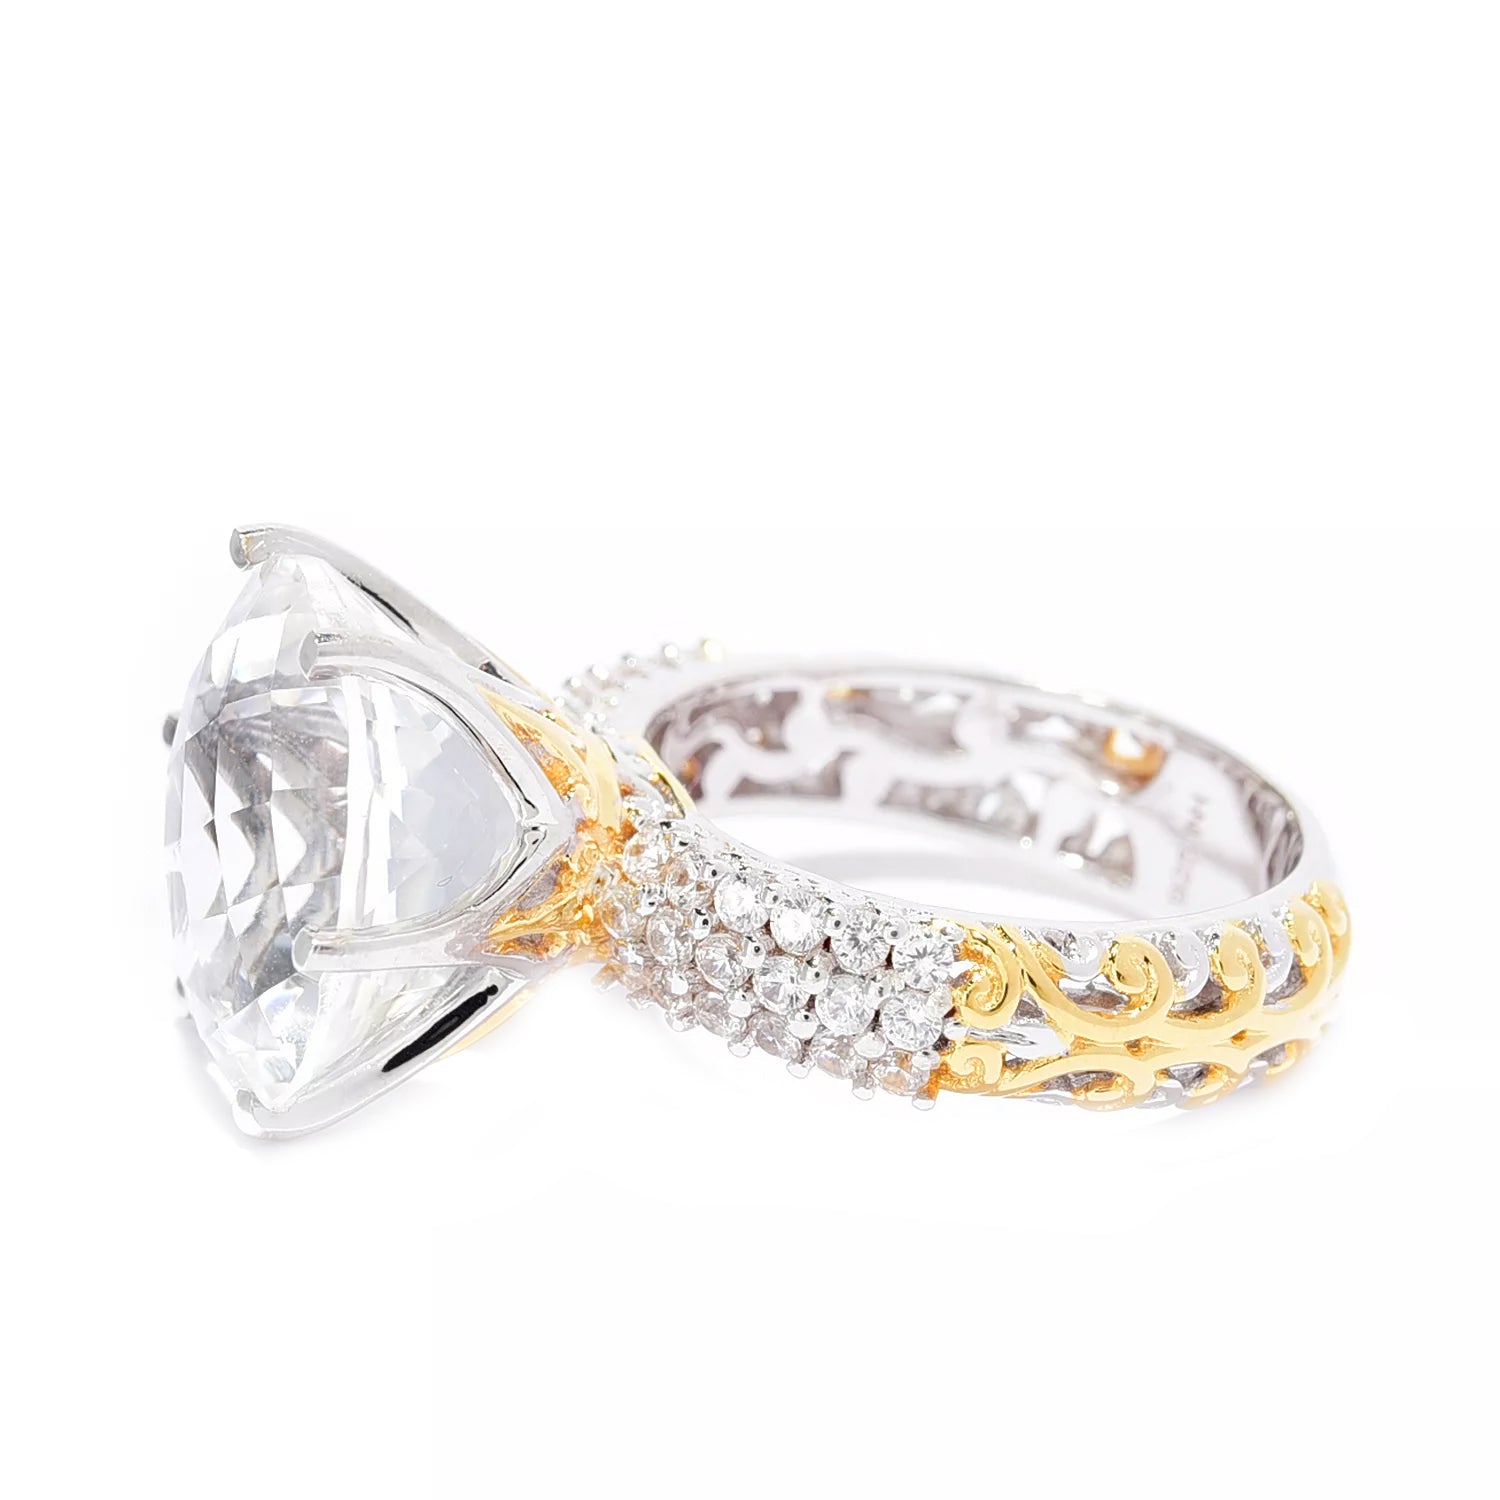 Gems en Vogue 10.45ctw Jubilee Cut Clear Quartz & White Zircon Ring